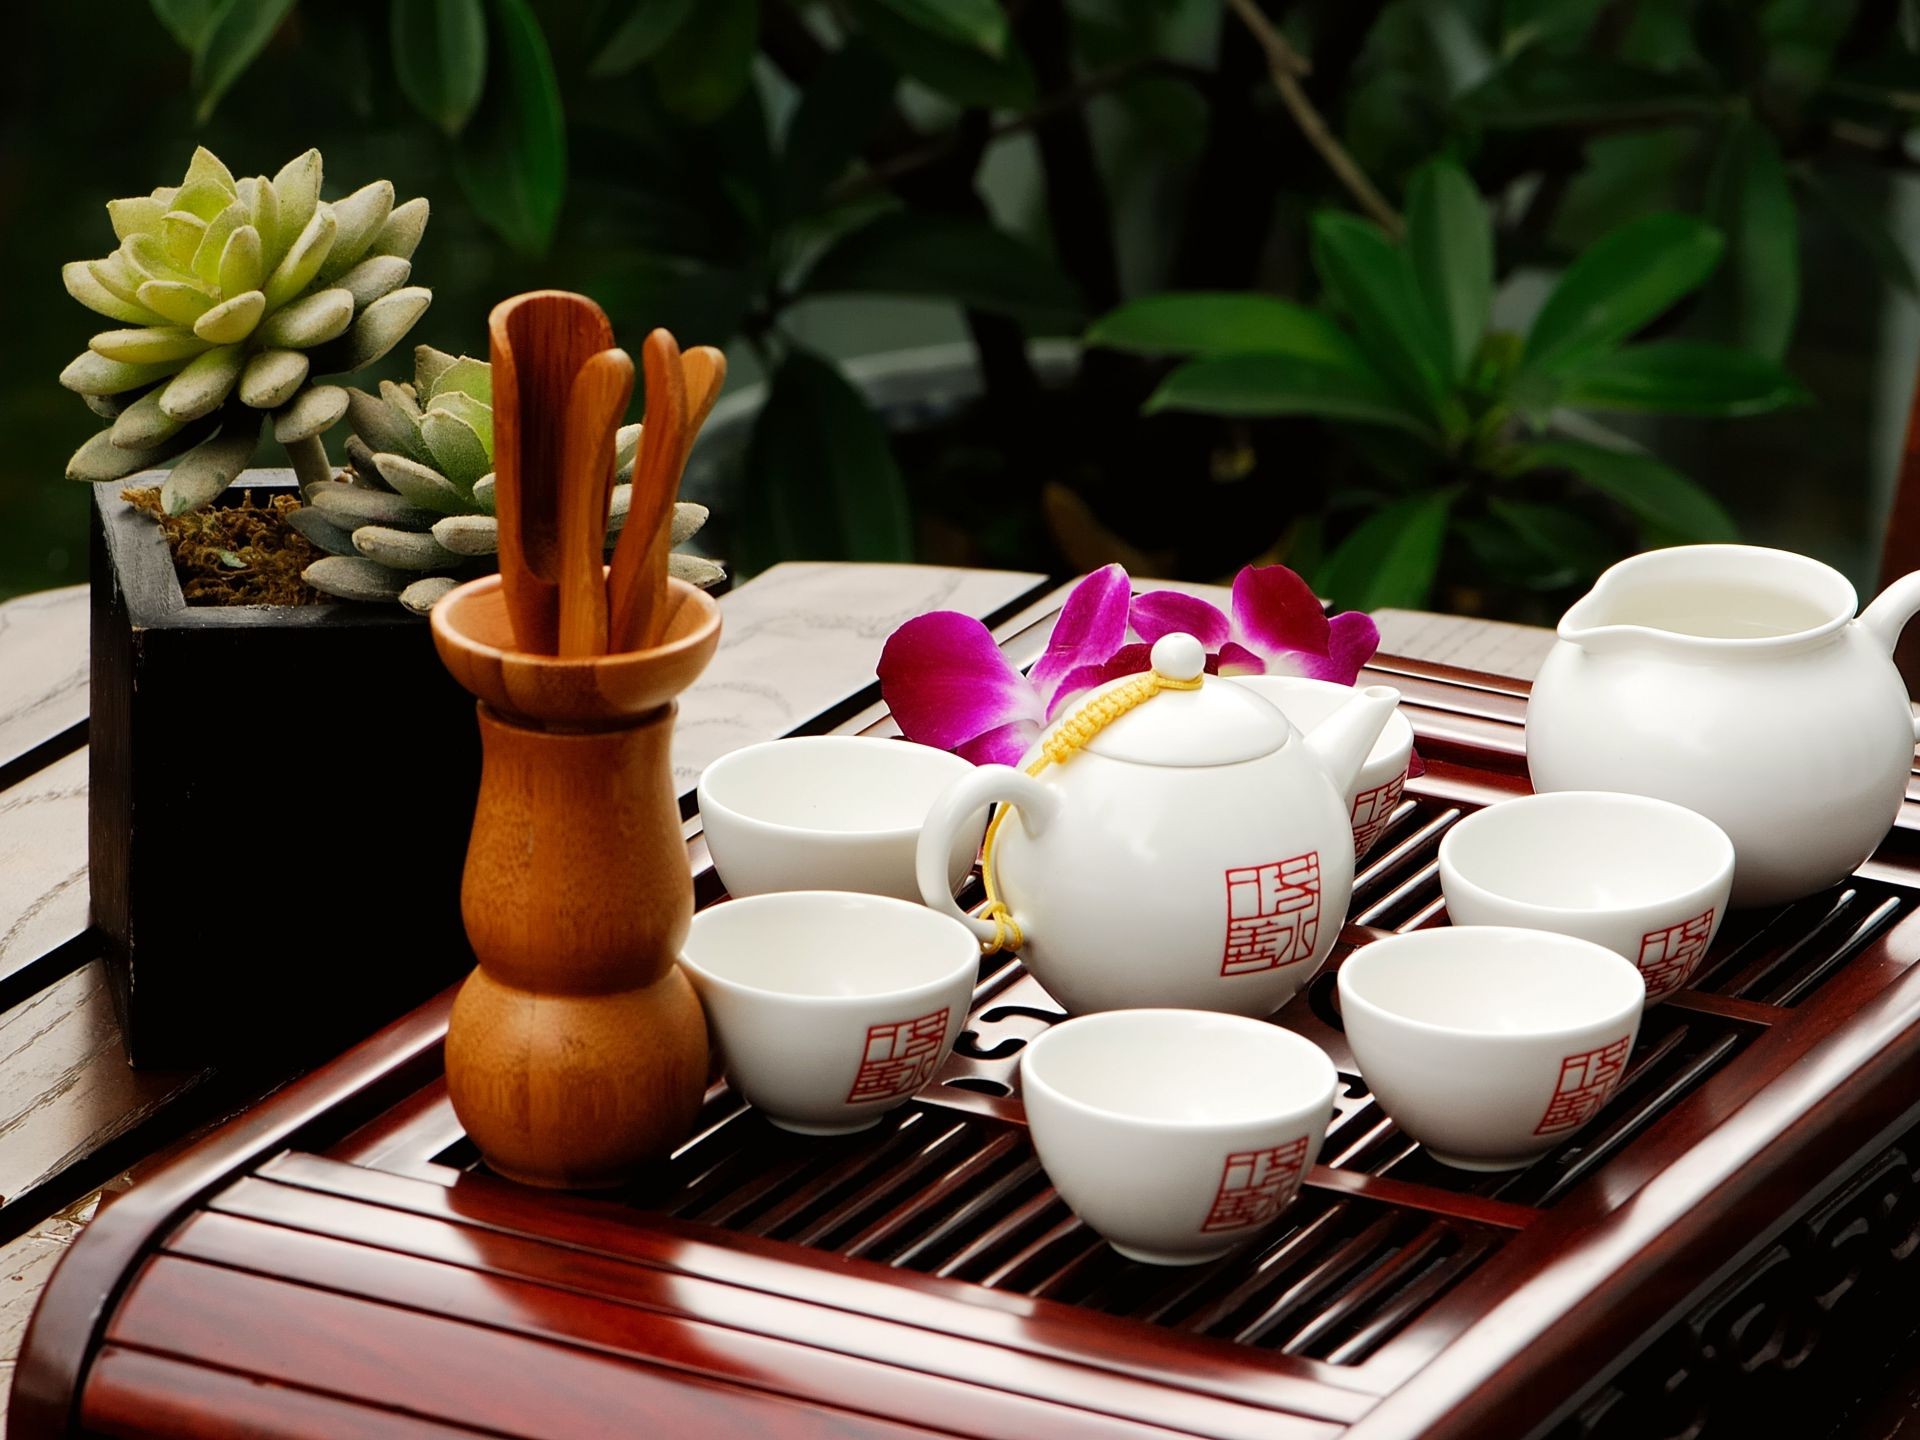 tea coffee cup table food tableware drink breakfast restaurant relaxation mug pot porcelain ceramic hot wood dishware dining